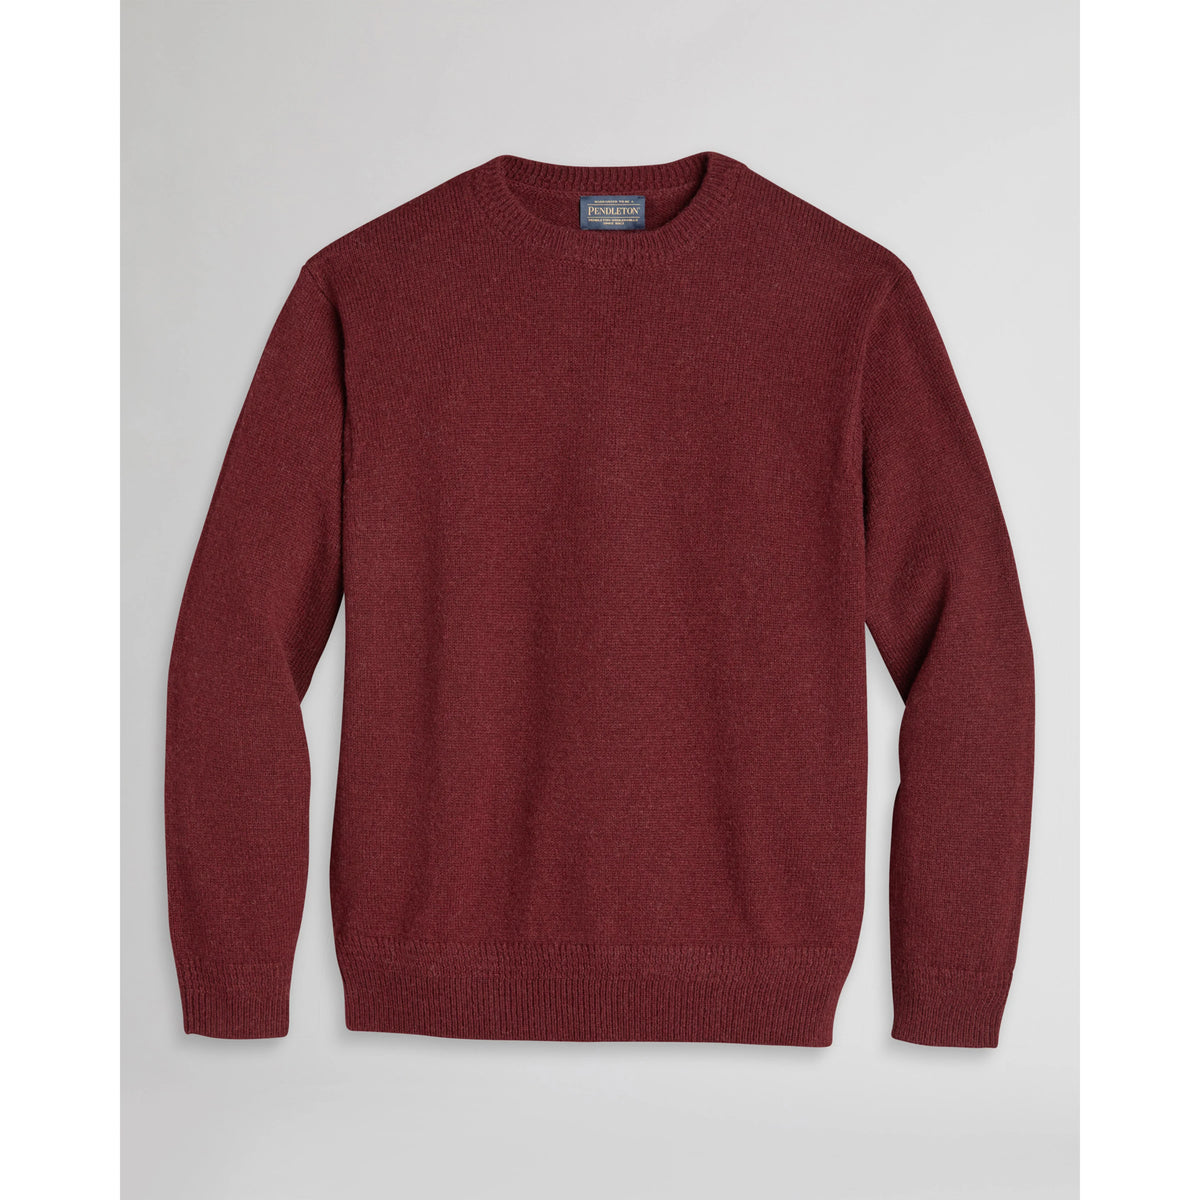 Pendleton | Shetland Washable Wool Crewneck Sweater | Men's ...